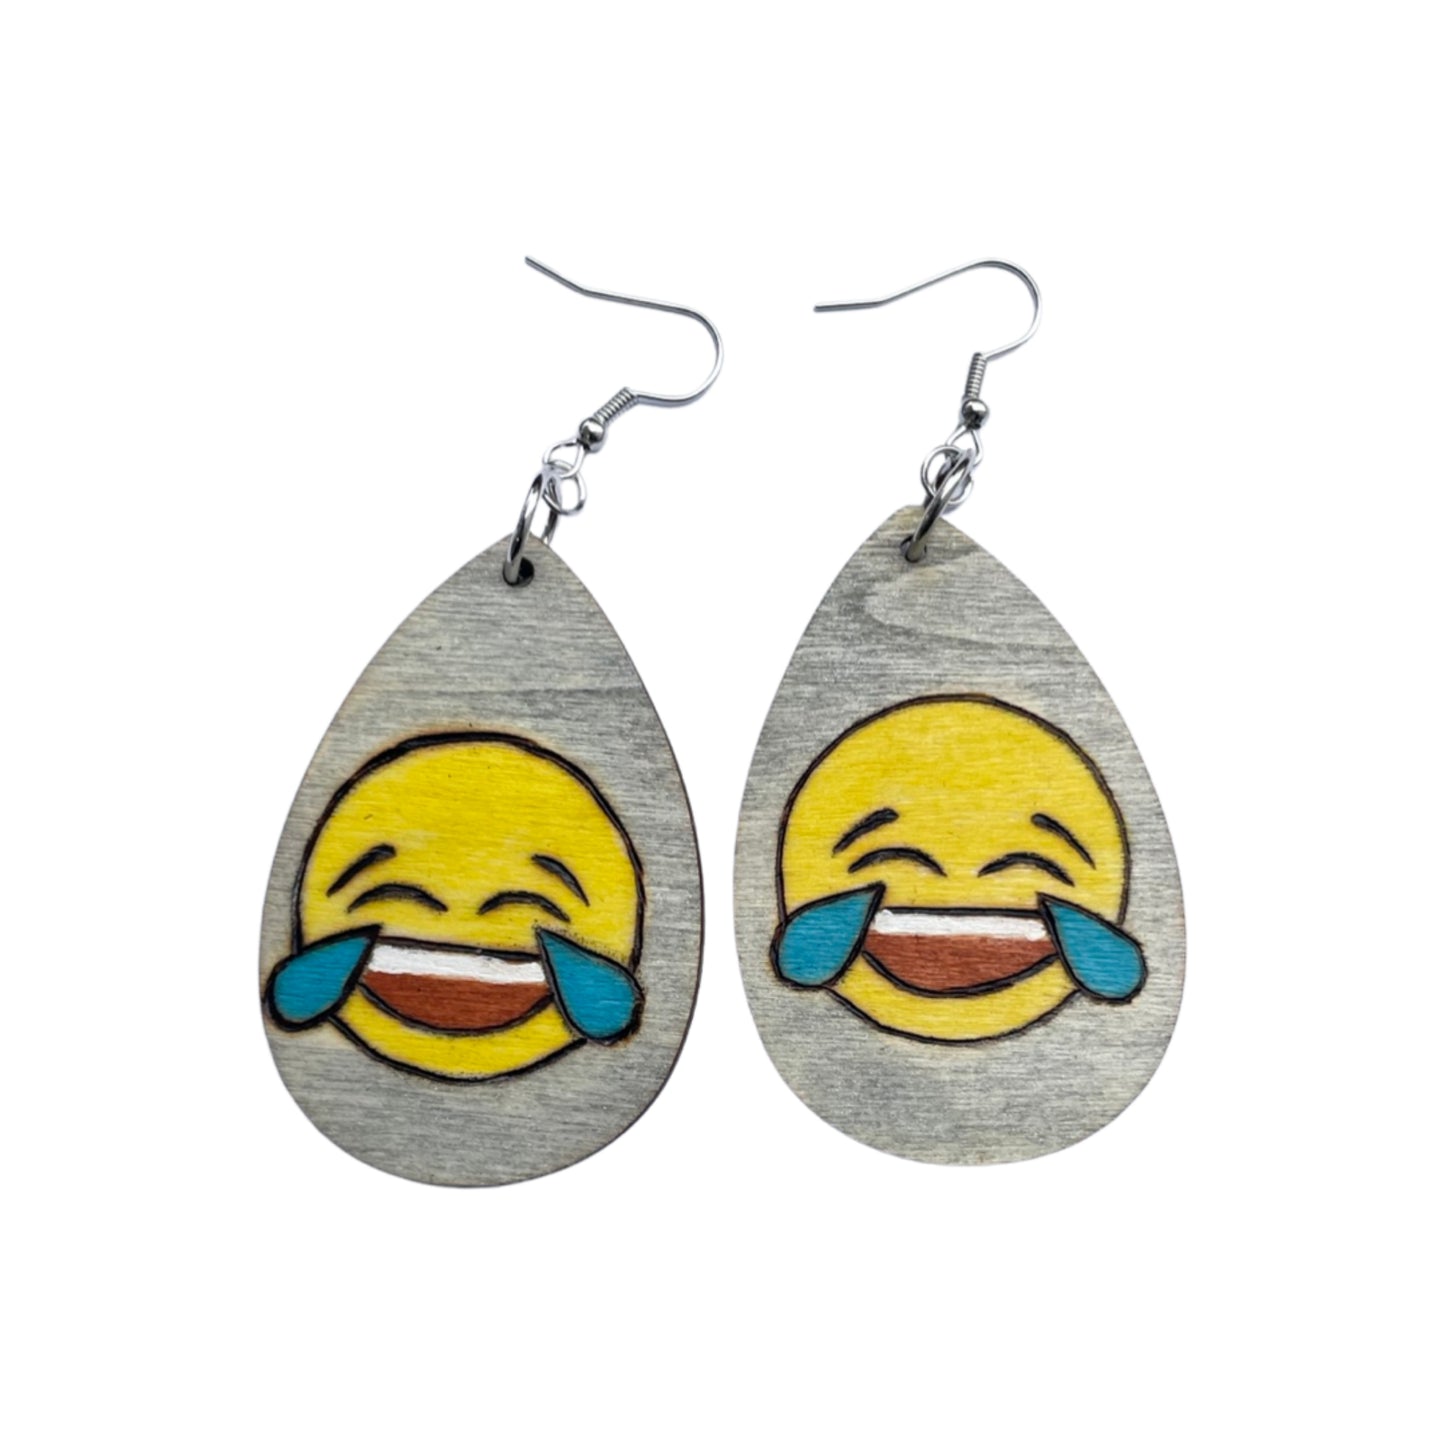 Laughing Emoji Earrings Handmade Wood Burned and painted Fashion Light Weight Teardrop